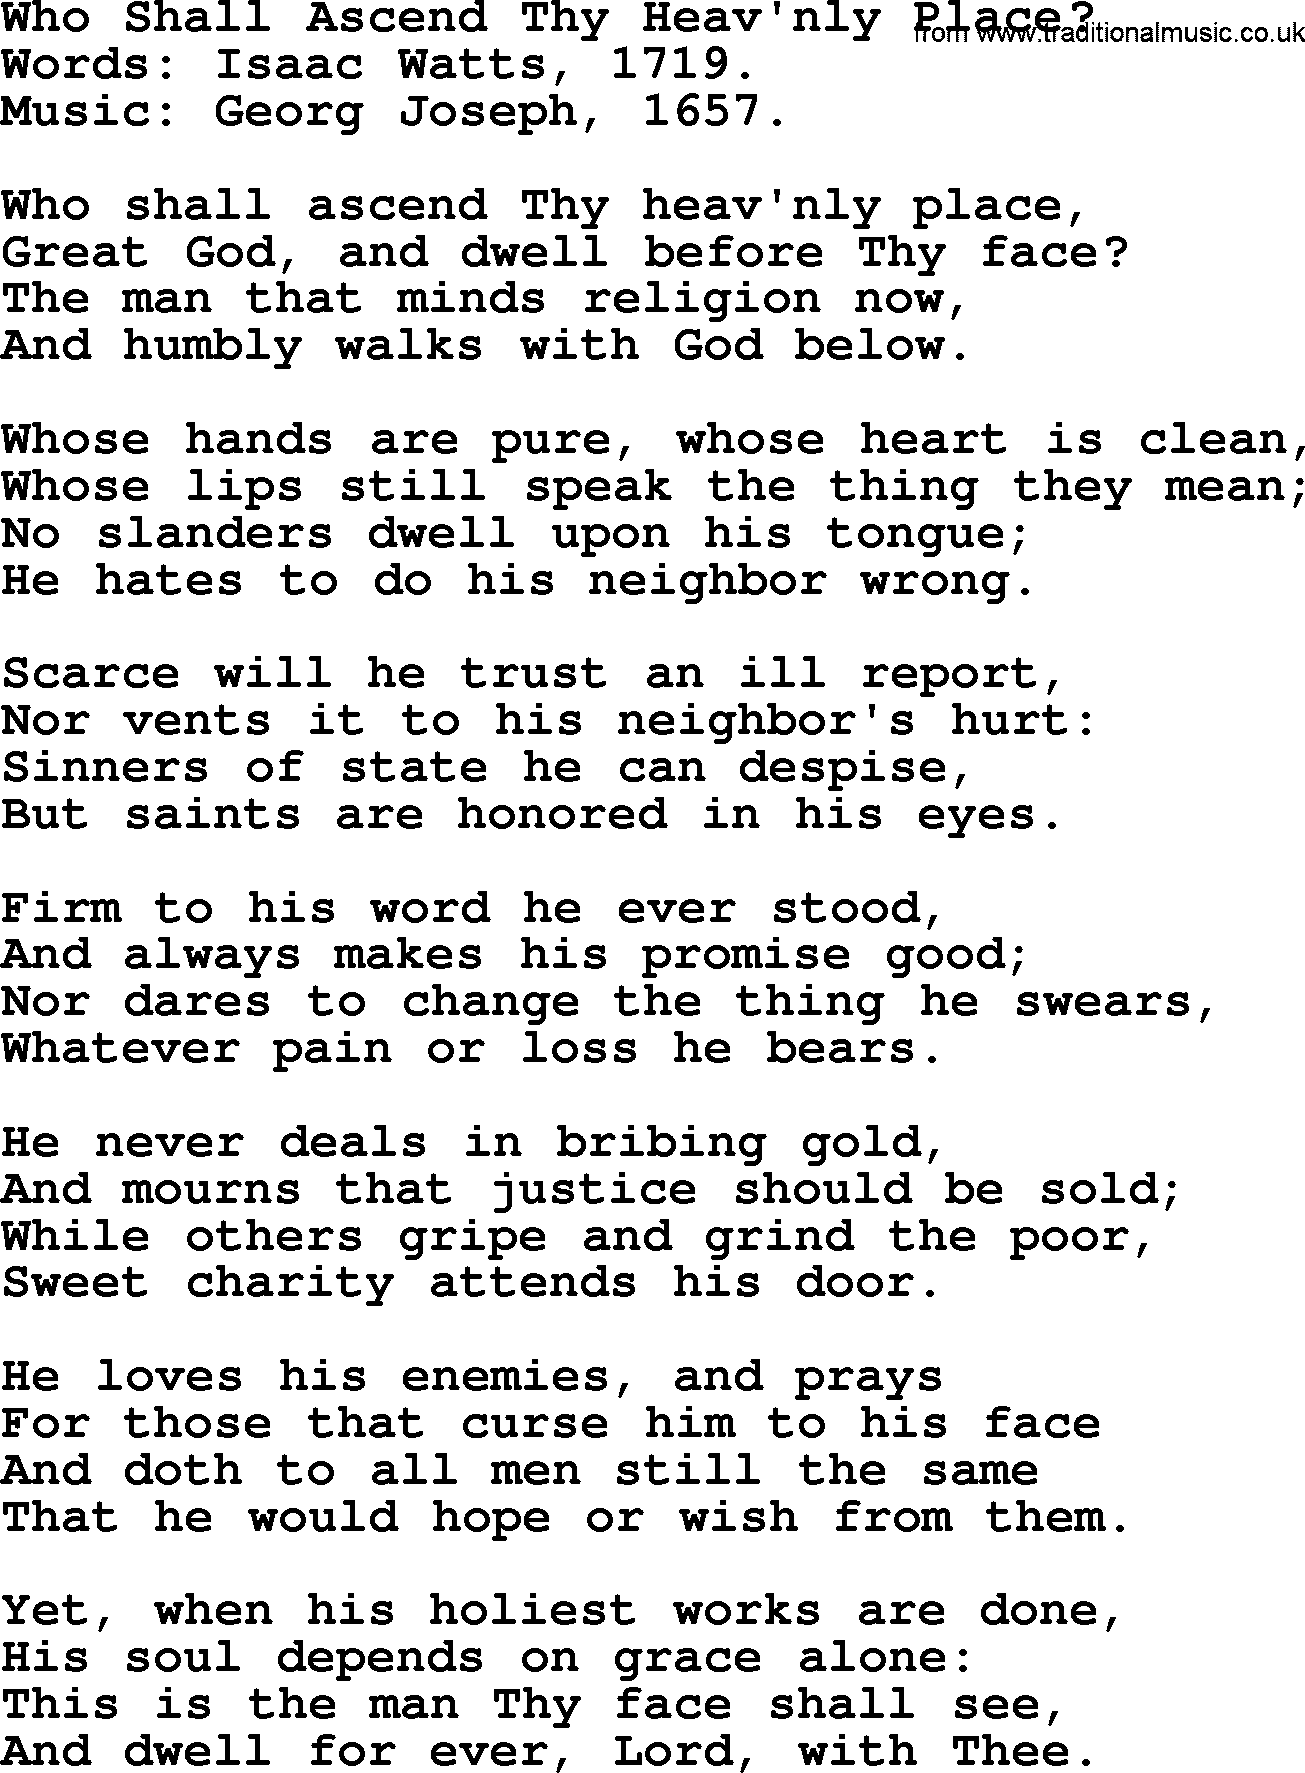 Isaac Watts Christian hymn: Who Shall Ascend Thy Heav'nly Place_- lyricss